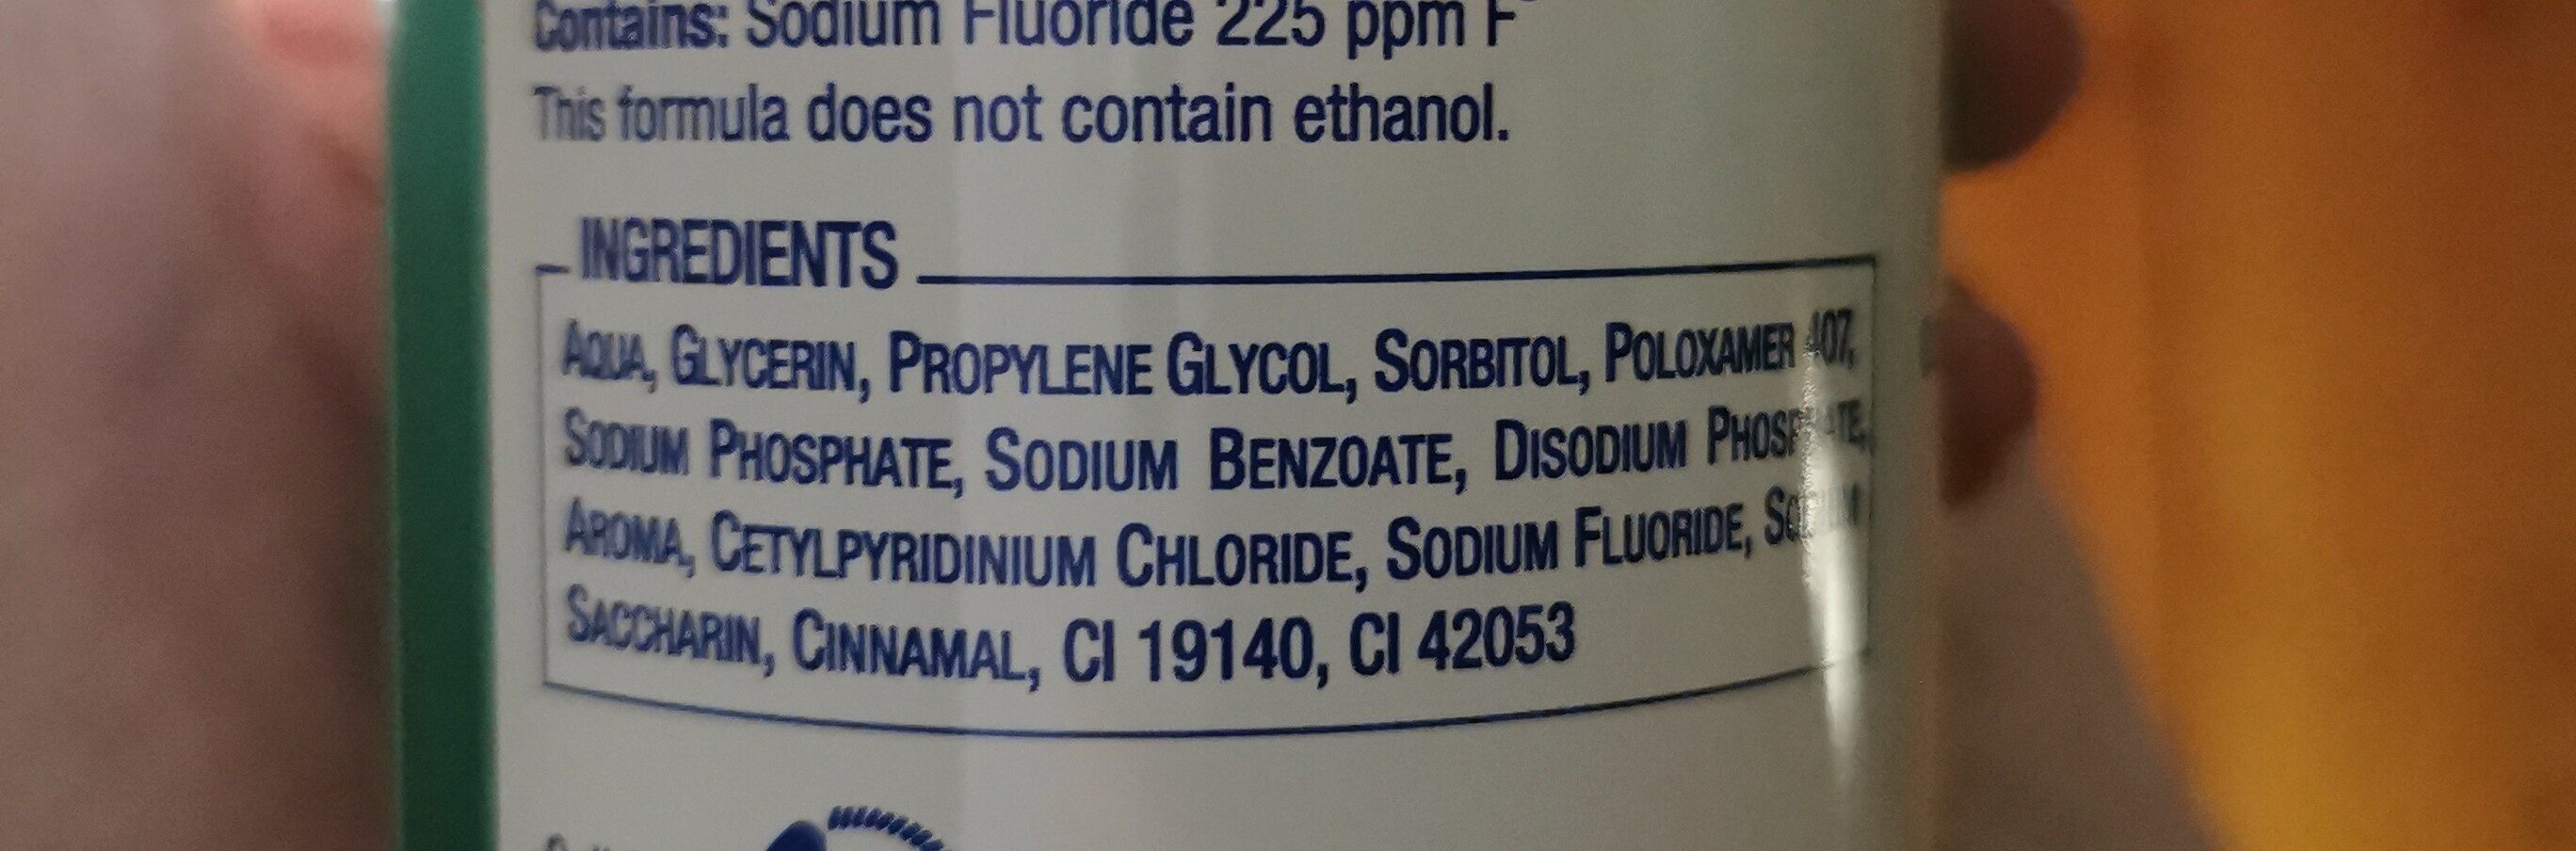 Flourigard fluoride rinse - Ingredients - en